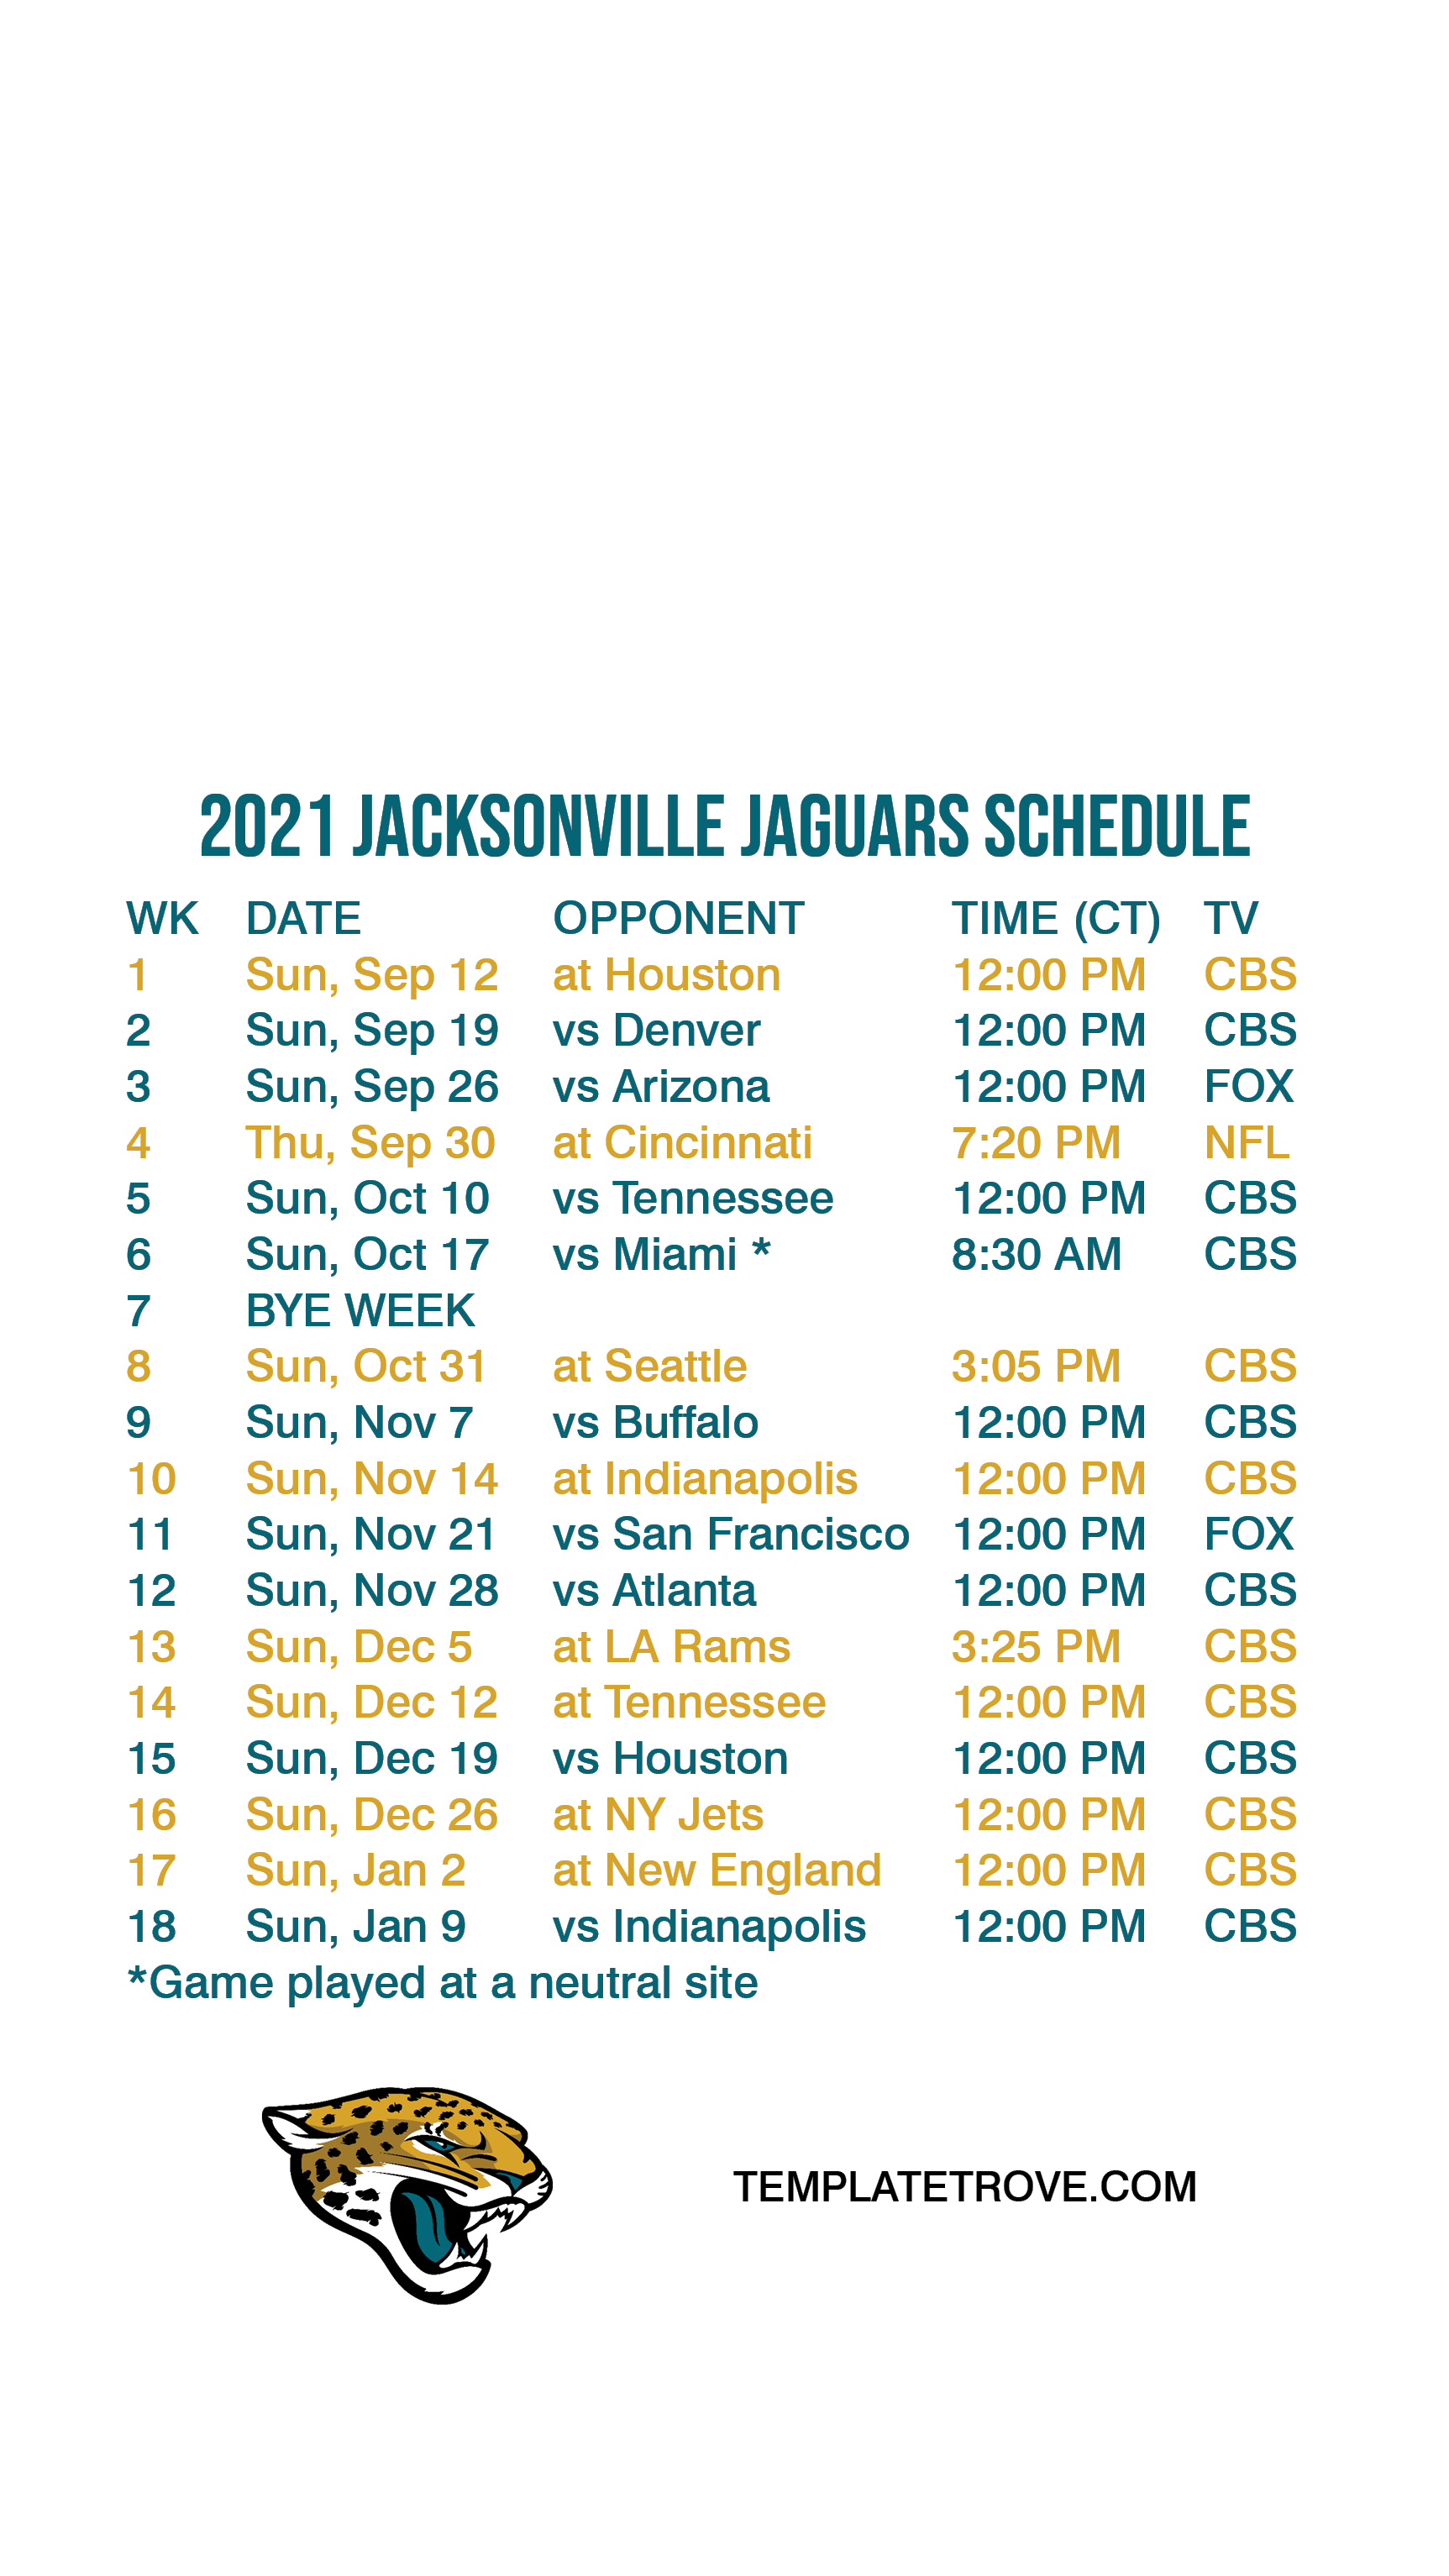 2021 jacksonville jaguars schedule